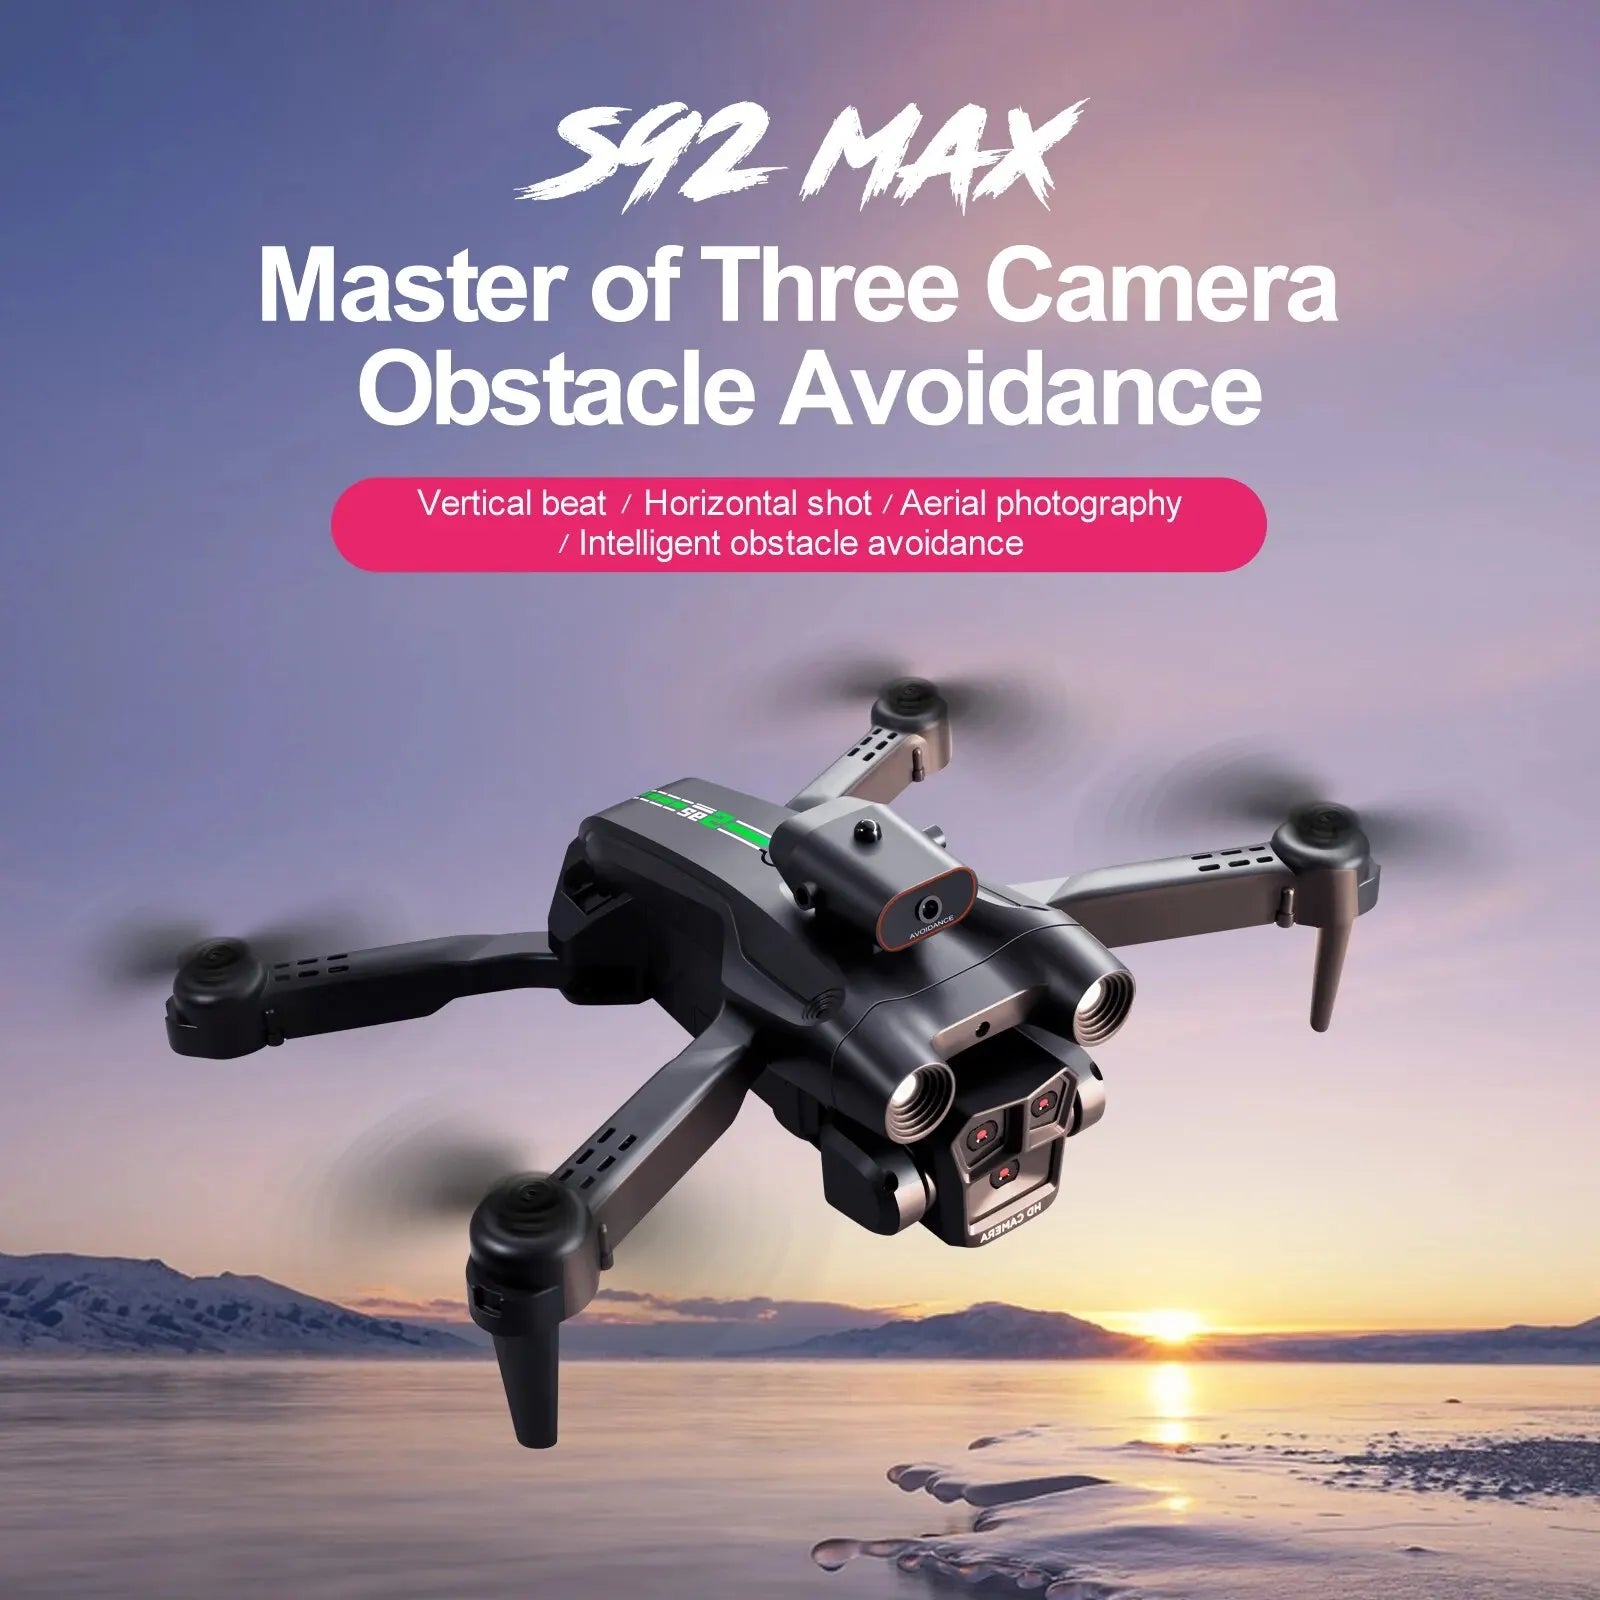 S92 Drone, 54max master of three camera obstacle avoidance avoda